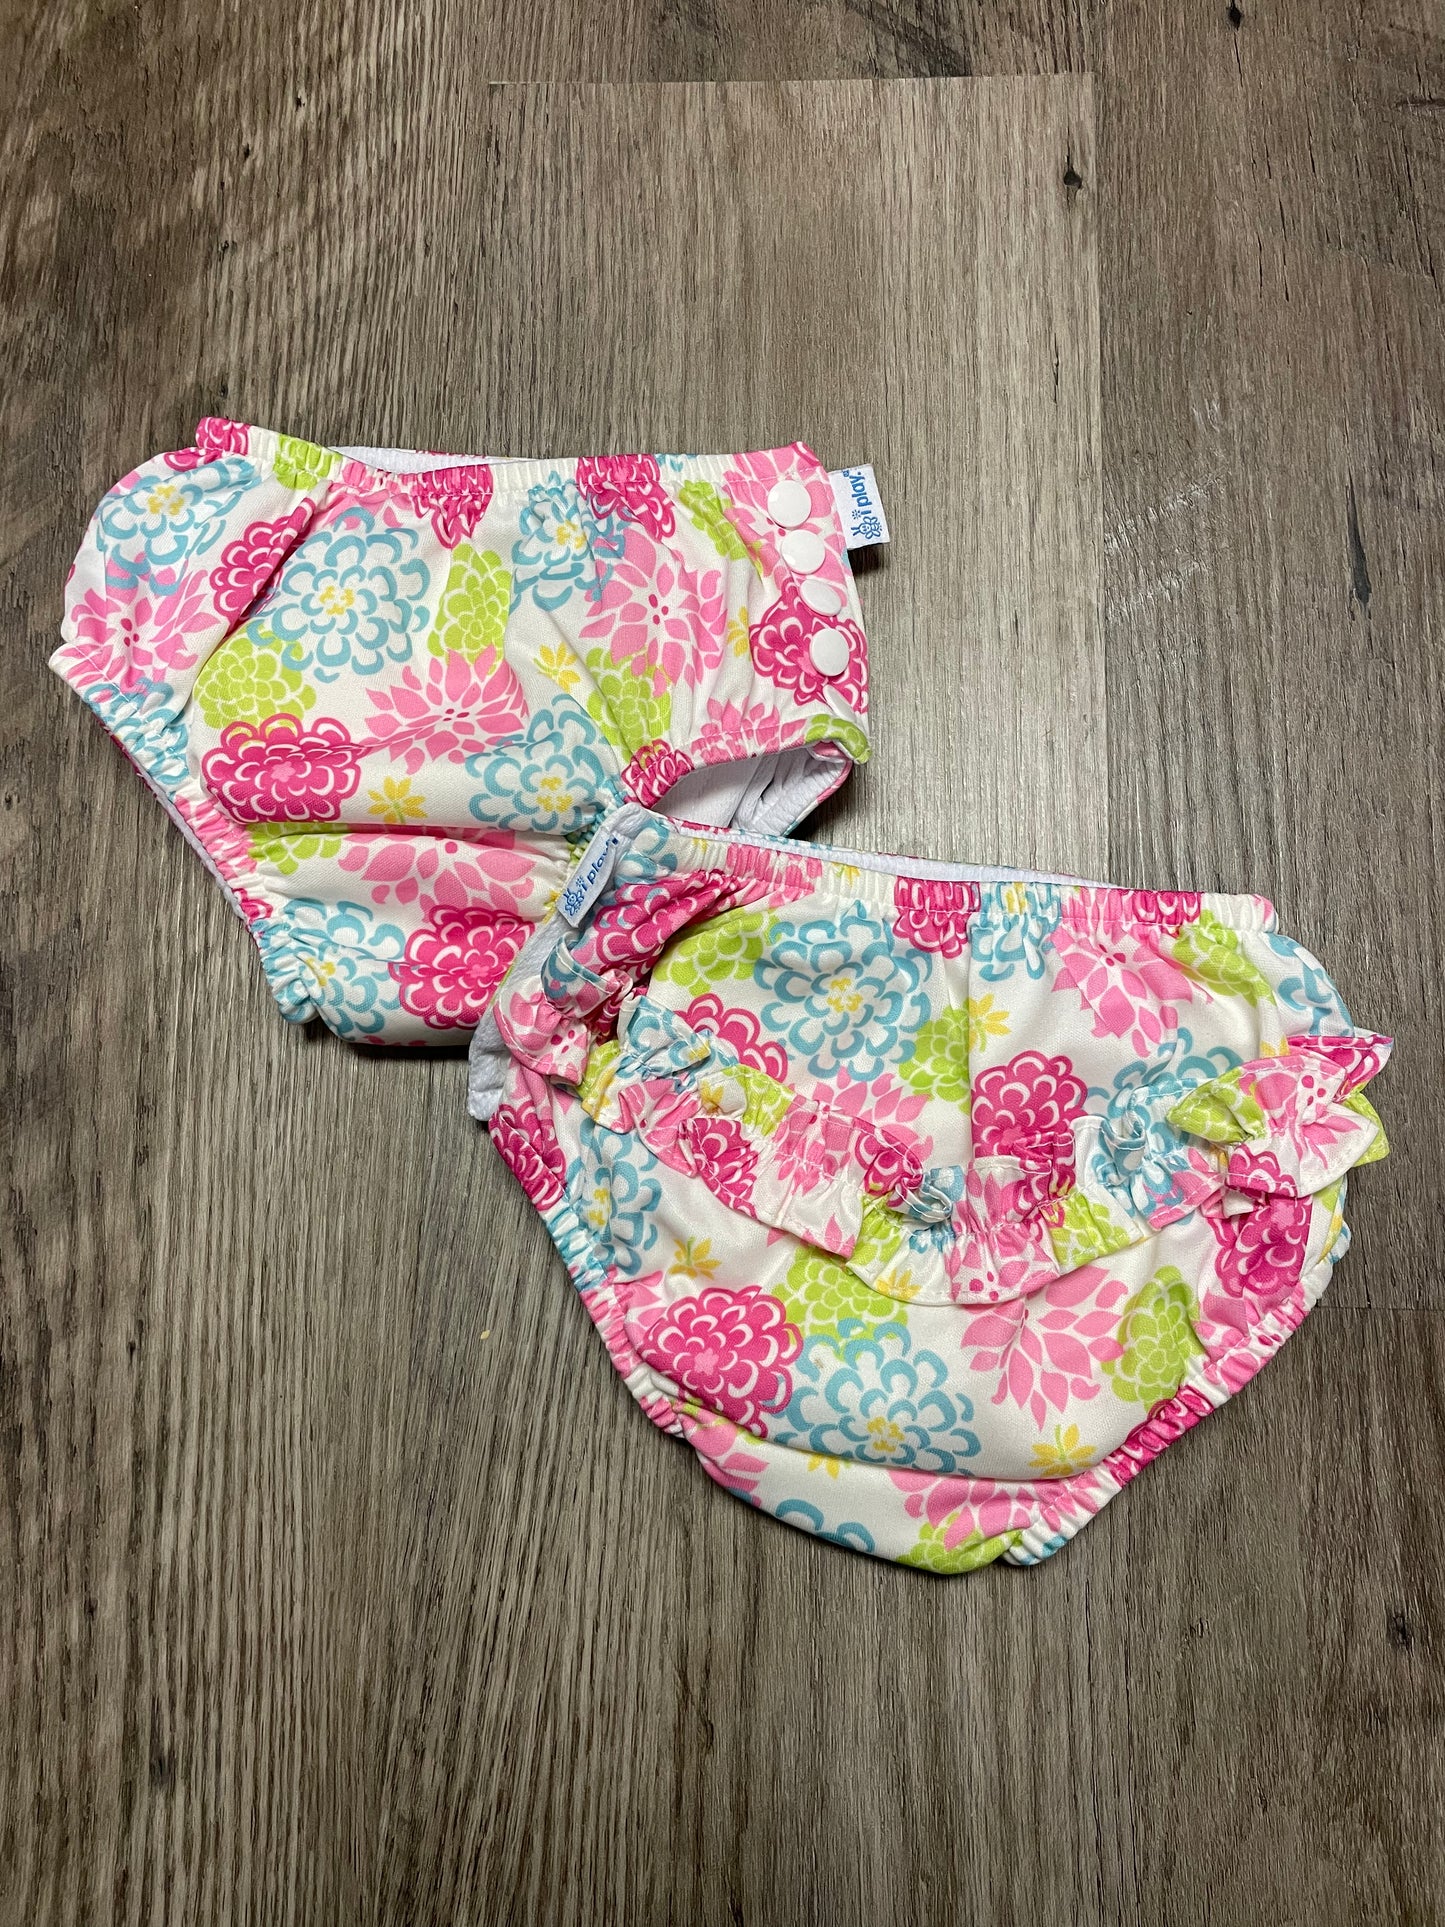 VGUC girl 24M two iPlay swim diapers